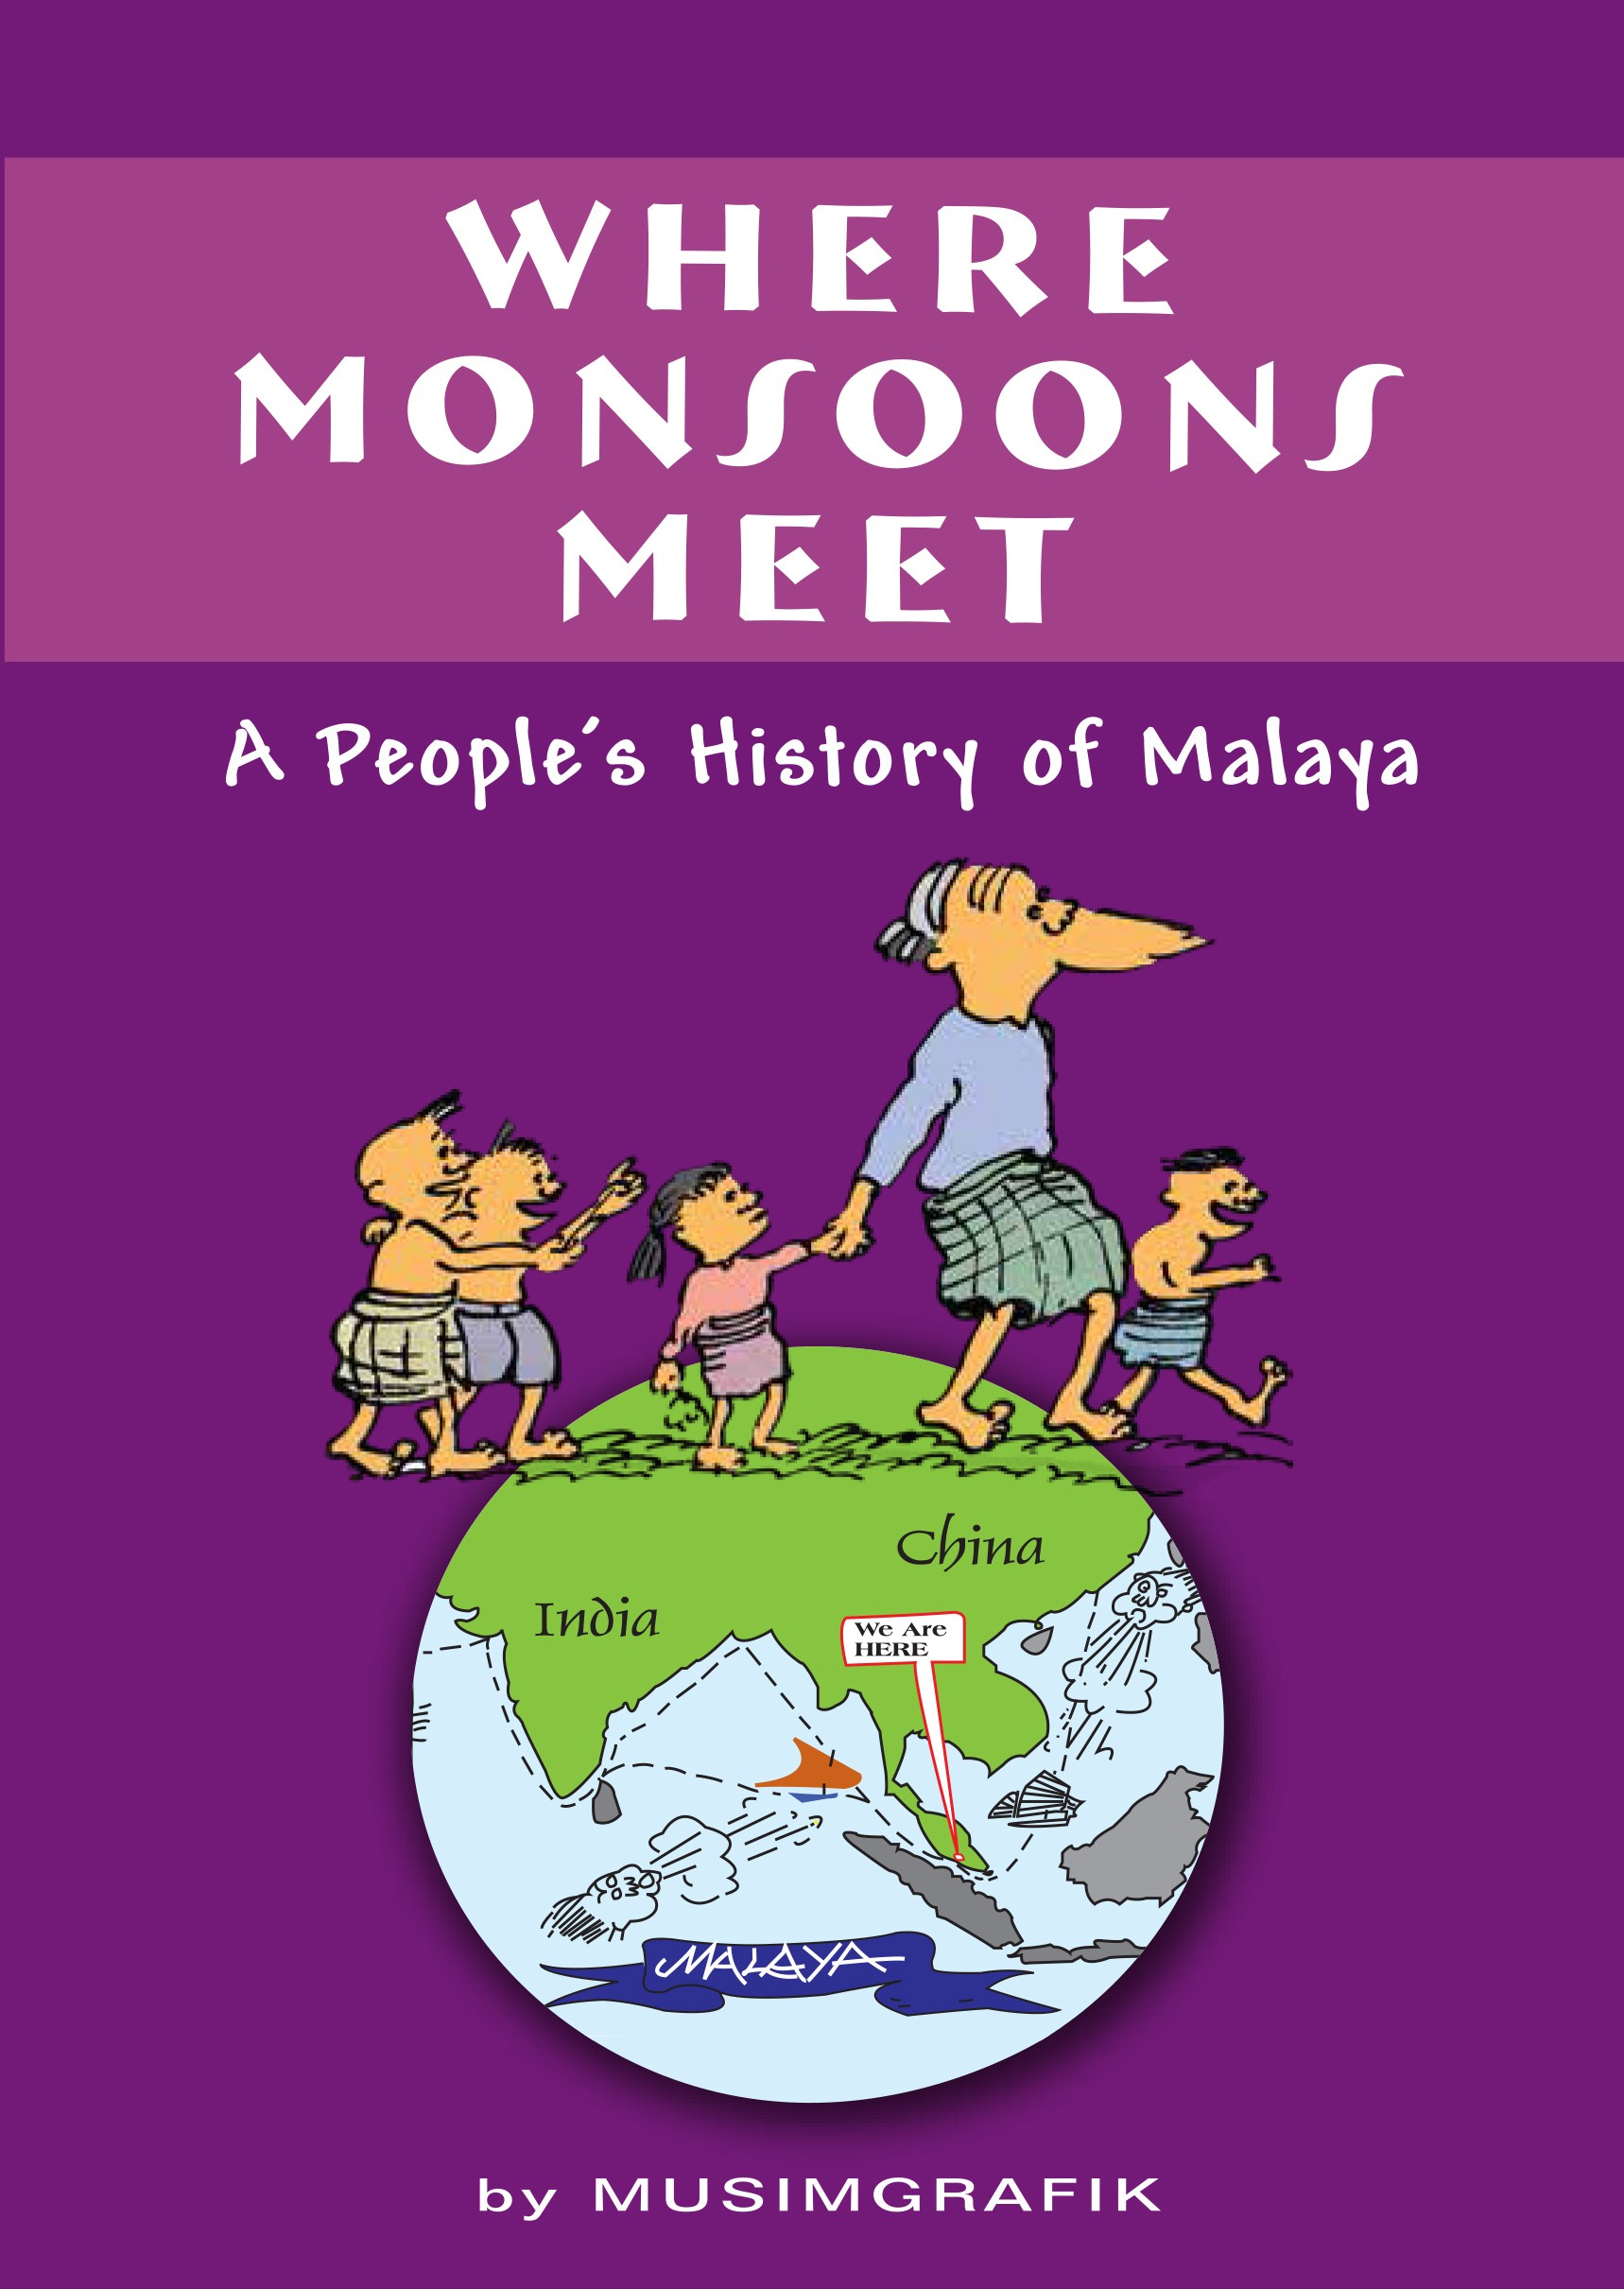 Where Monsoons Meet: A People's History of Malaya